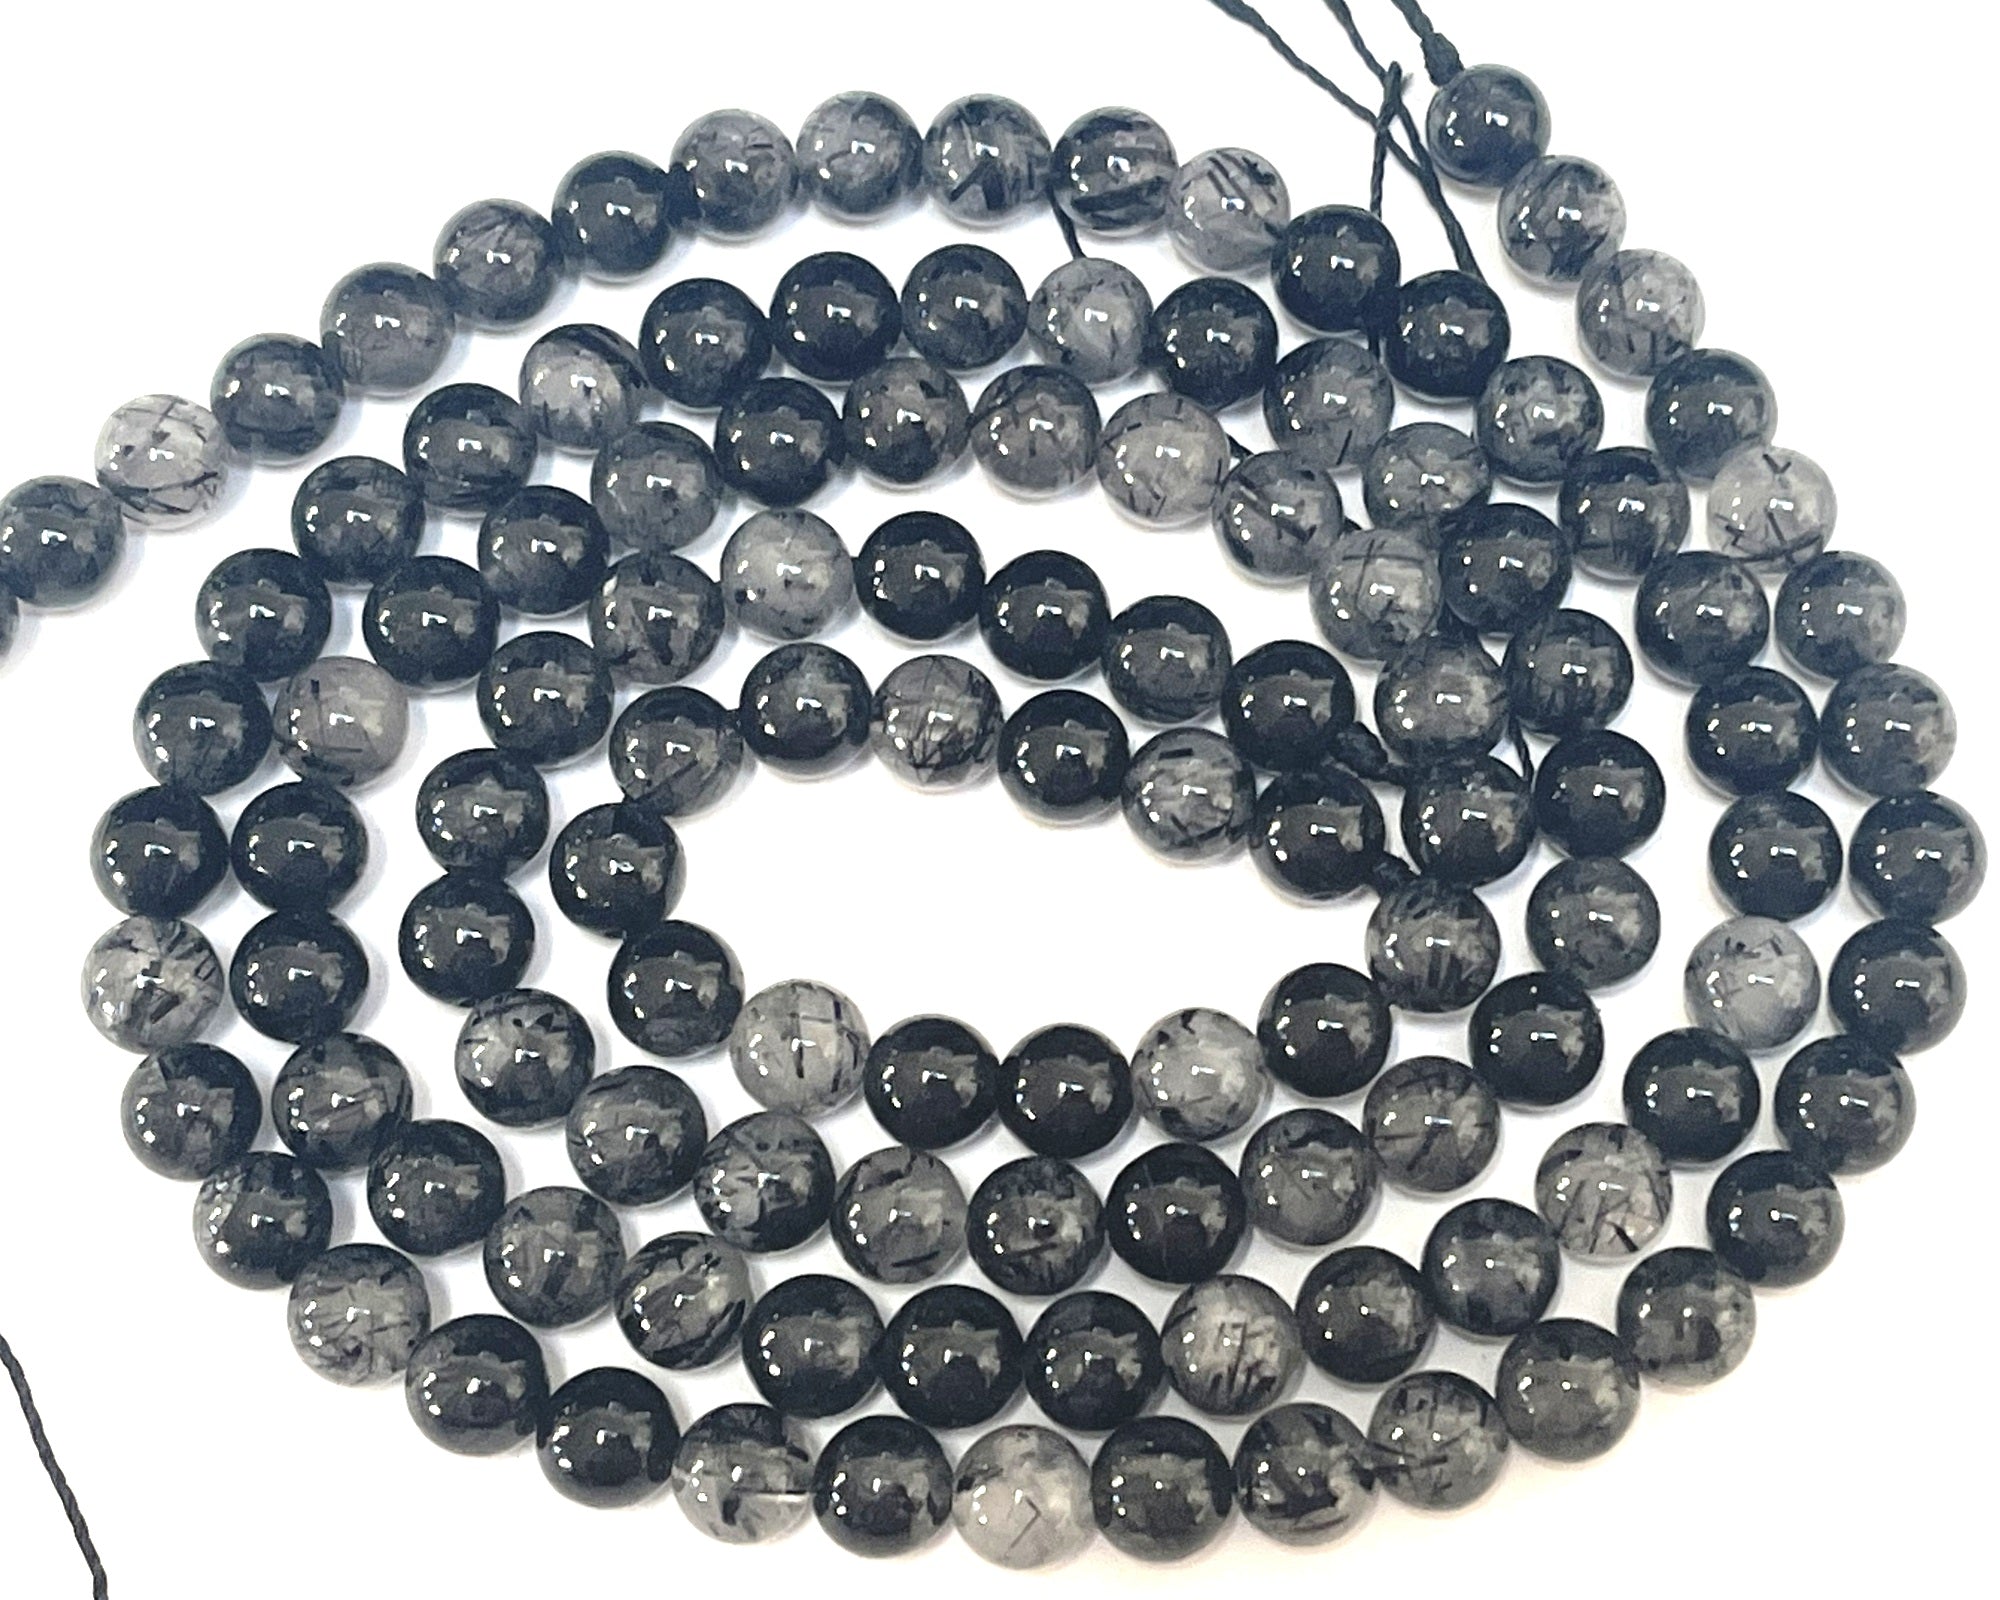 Black Tourmaline Rutilated Quartz 6mm round natural gemstone beads 15" strand